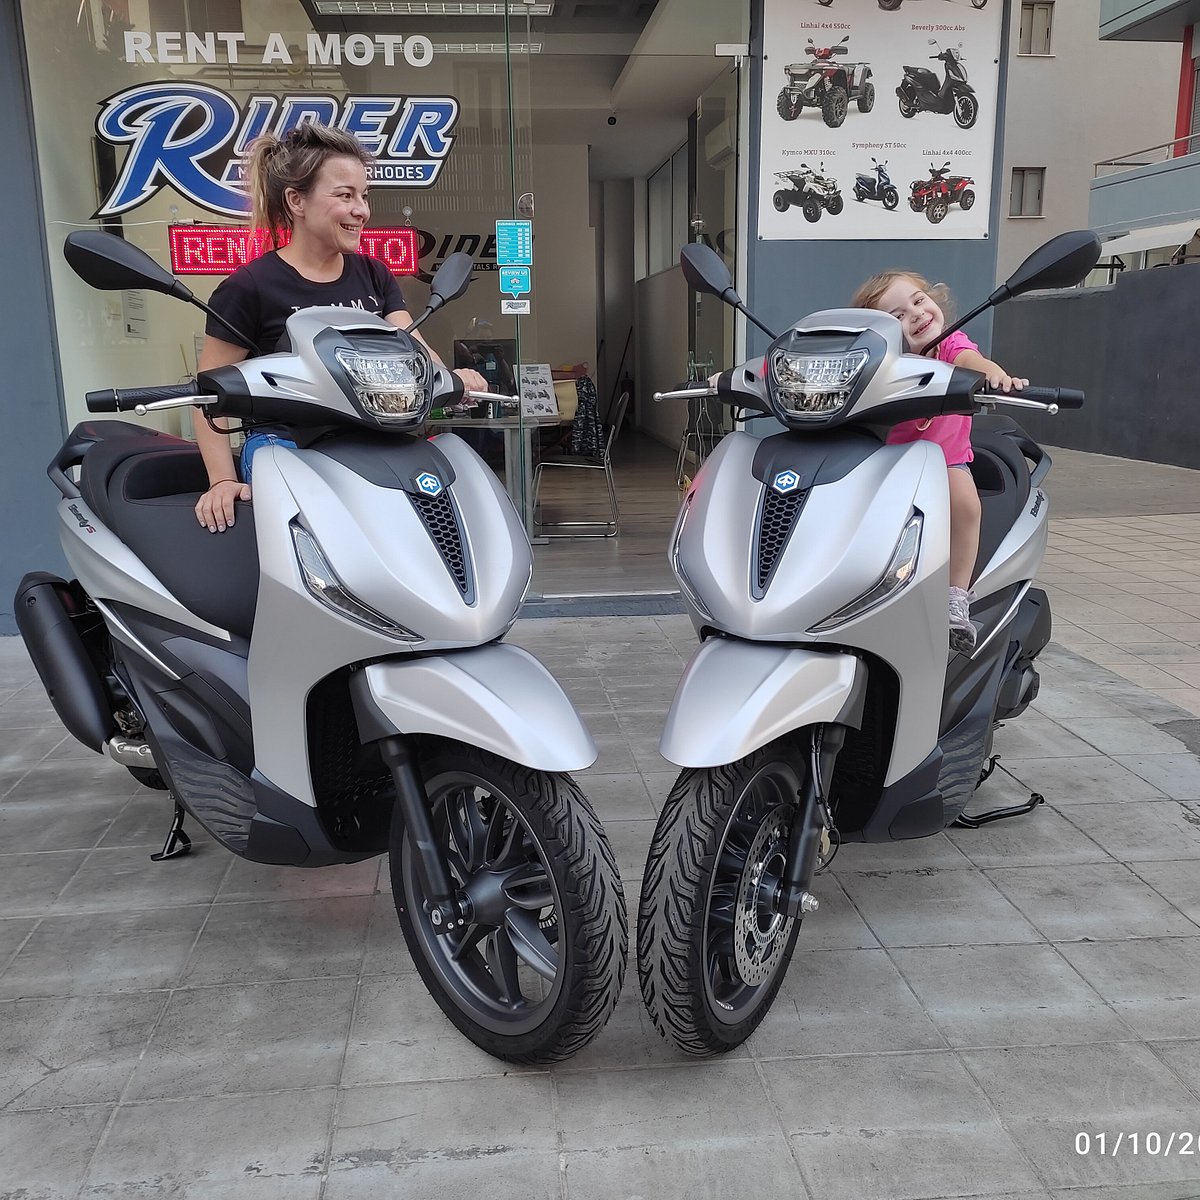 Tripadvisor, Rio Moto Adventure - Passeios/Aluguel de Motos Offroad:  experiência oferecida por Rio Moto Adventure